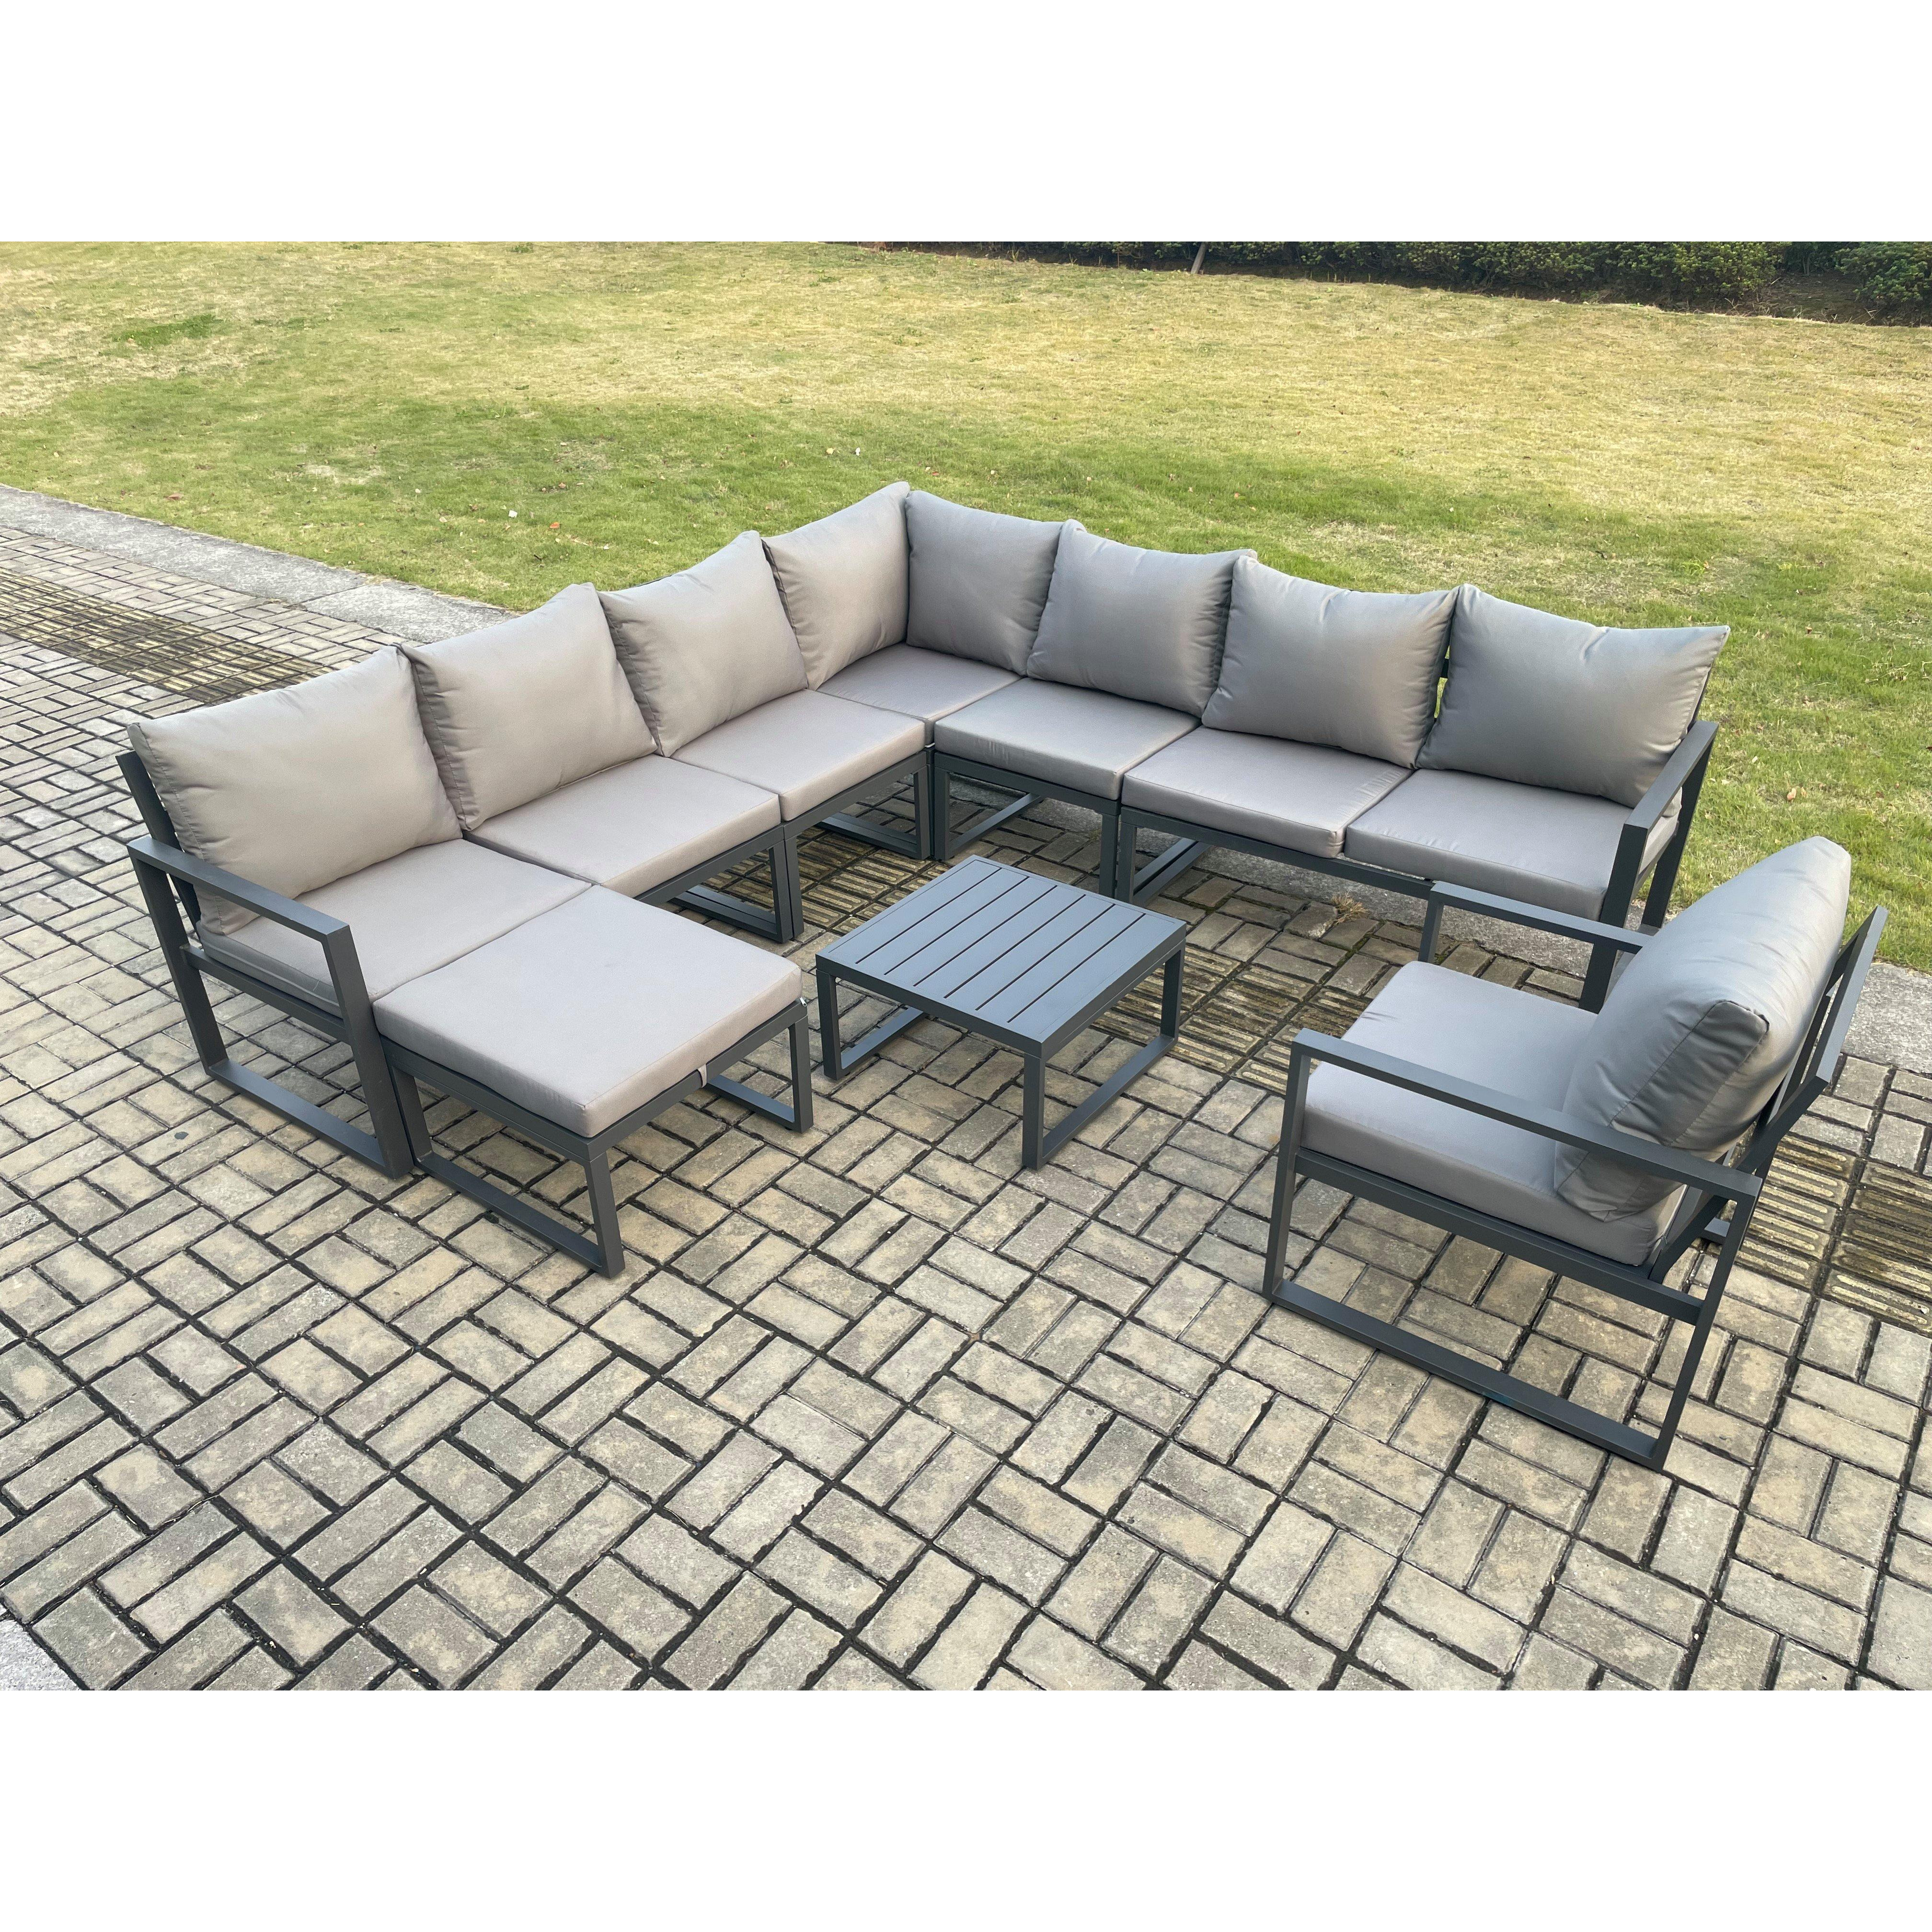 Outdoor Garden Furniture Patio Lounge Corner Sofa Aluminium Set with Square Coffee Table Big Footstool Chair Dark Grey - image 1